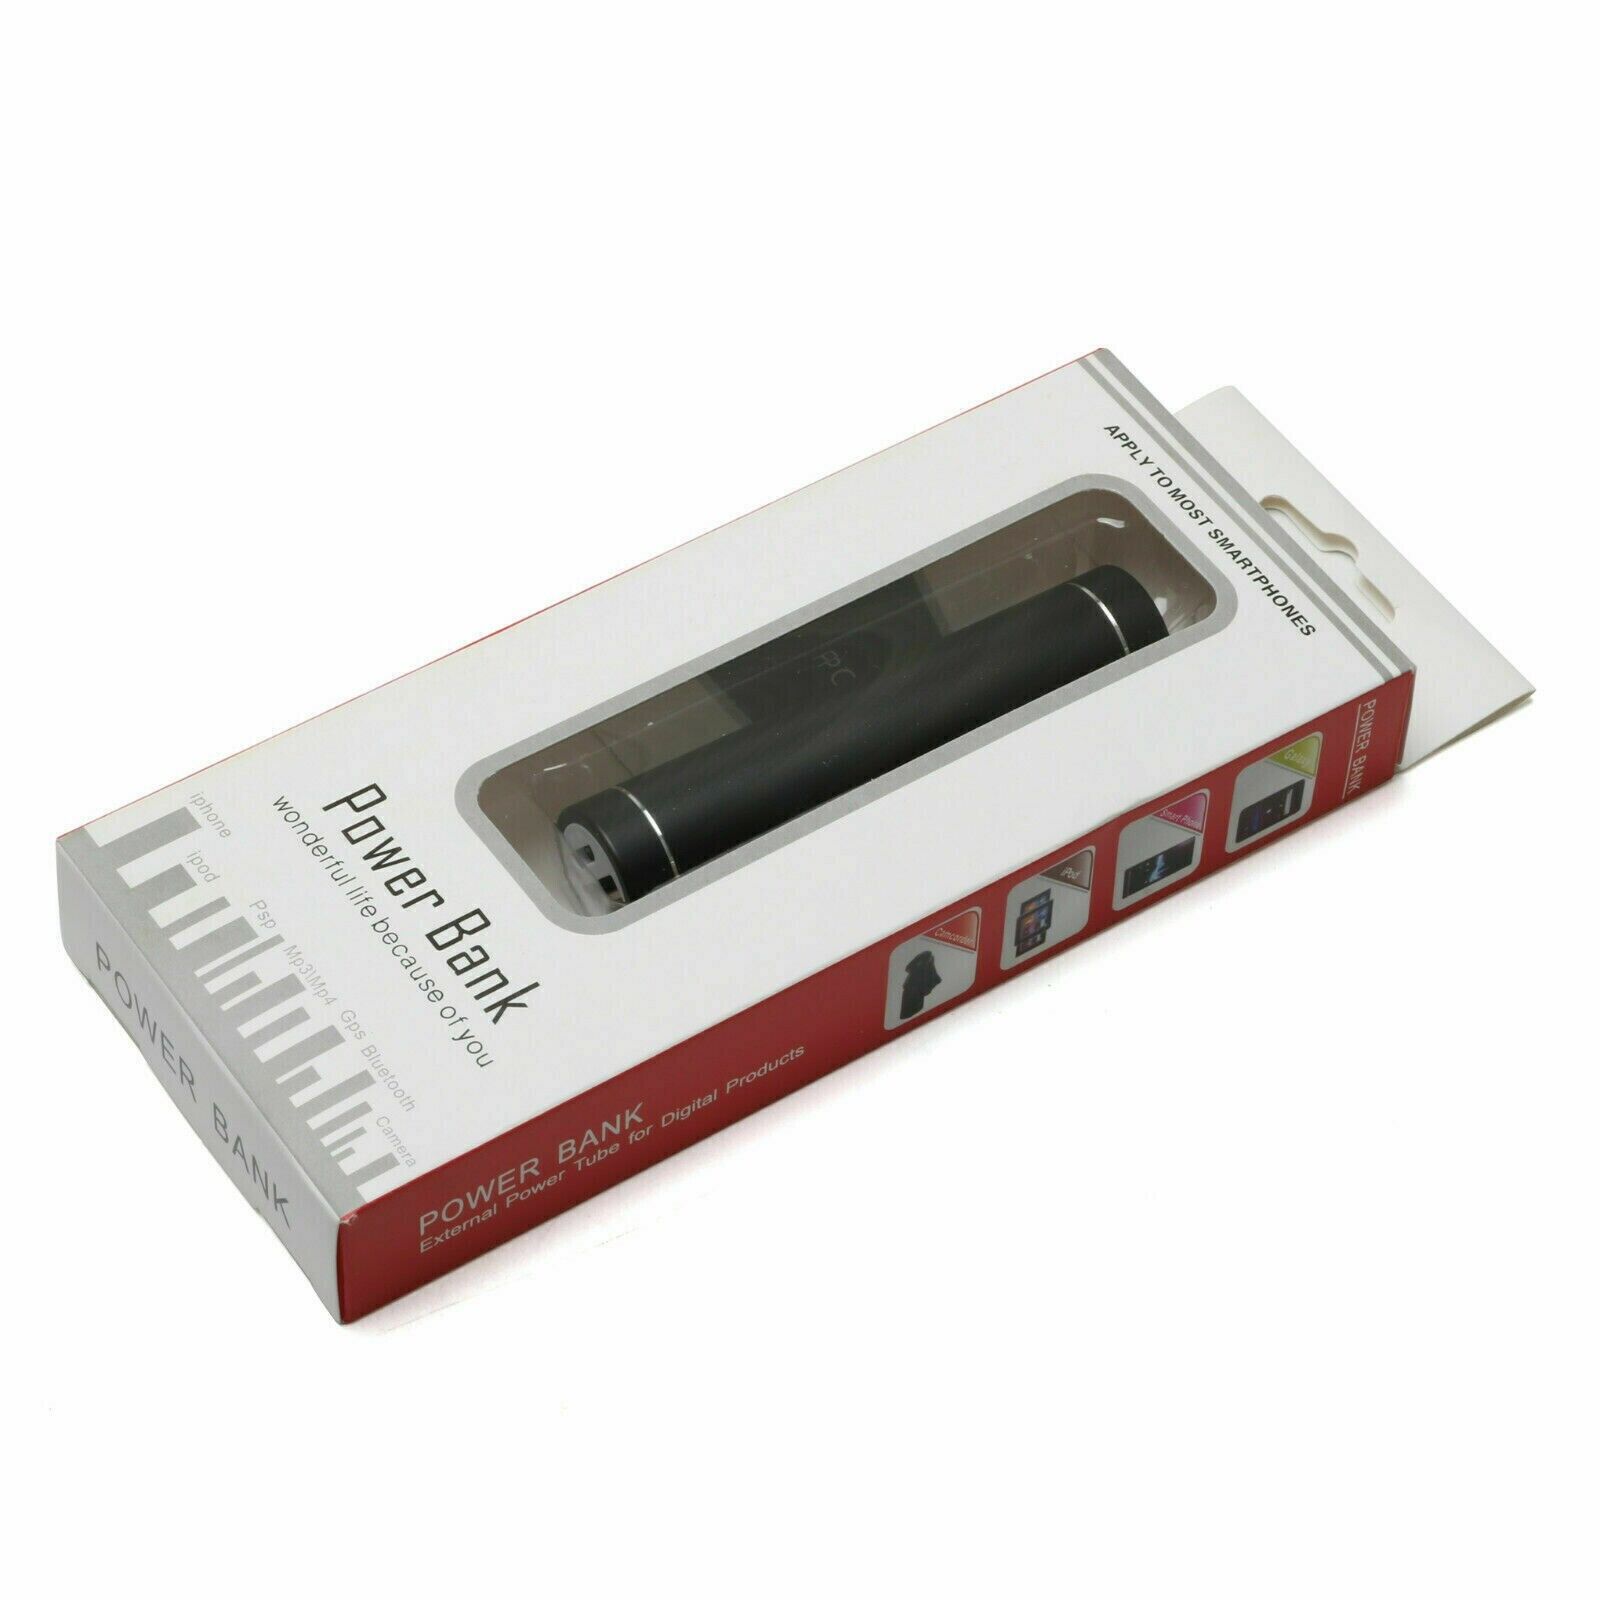 NEW 2600mAh Mini Portable External USB Power Bank Battery For Mobile Phone